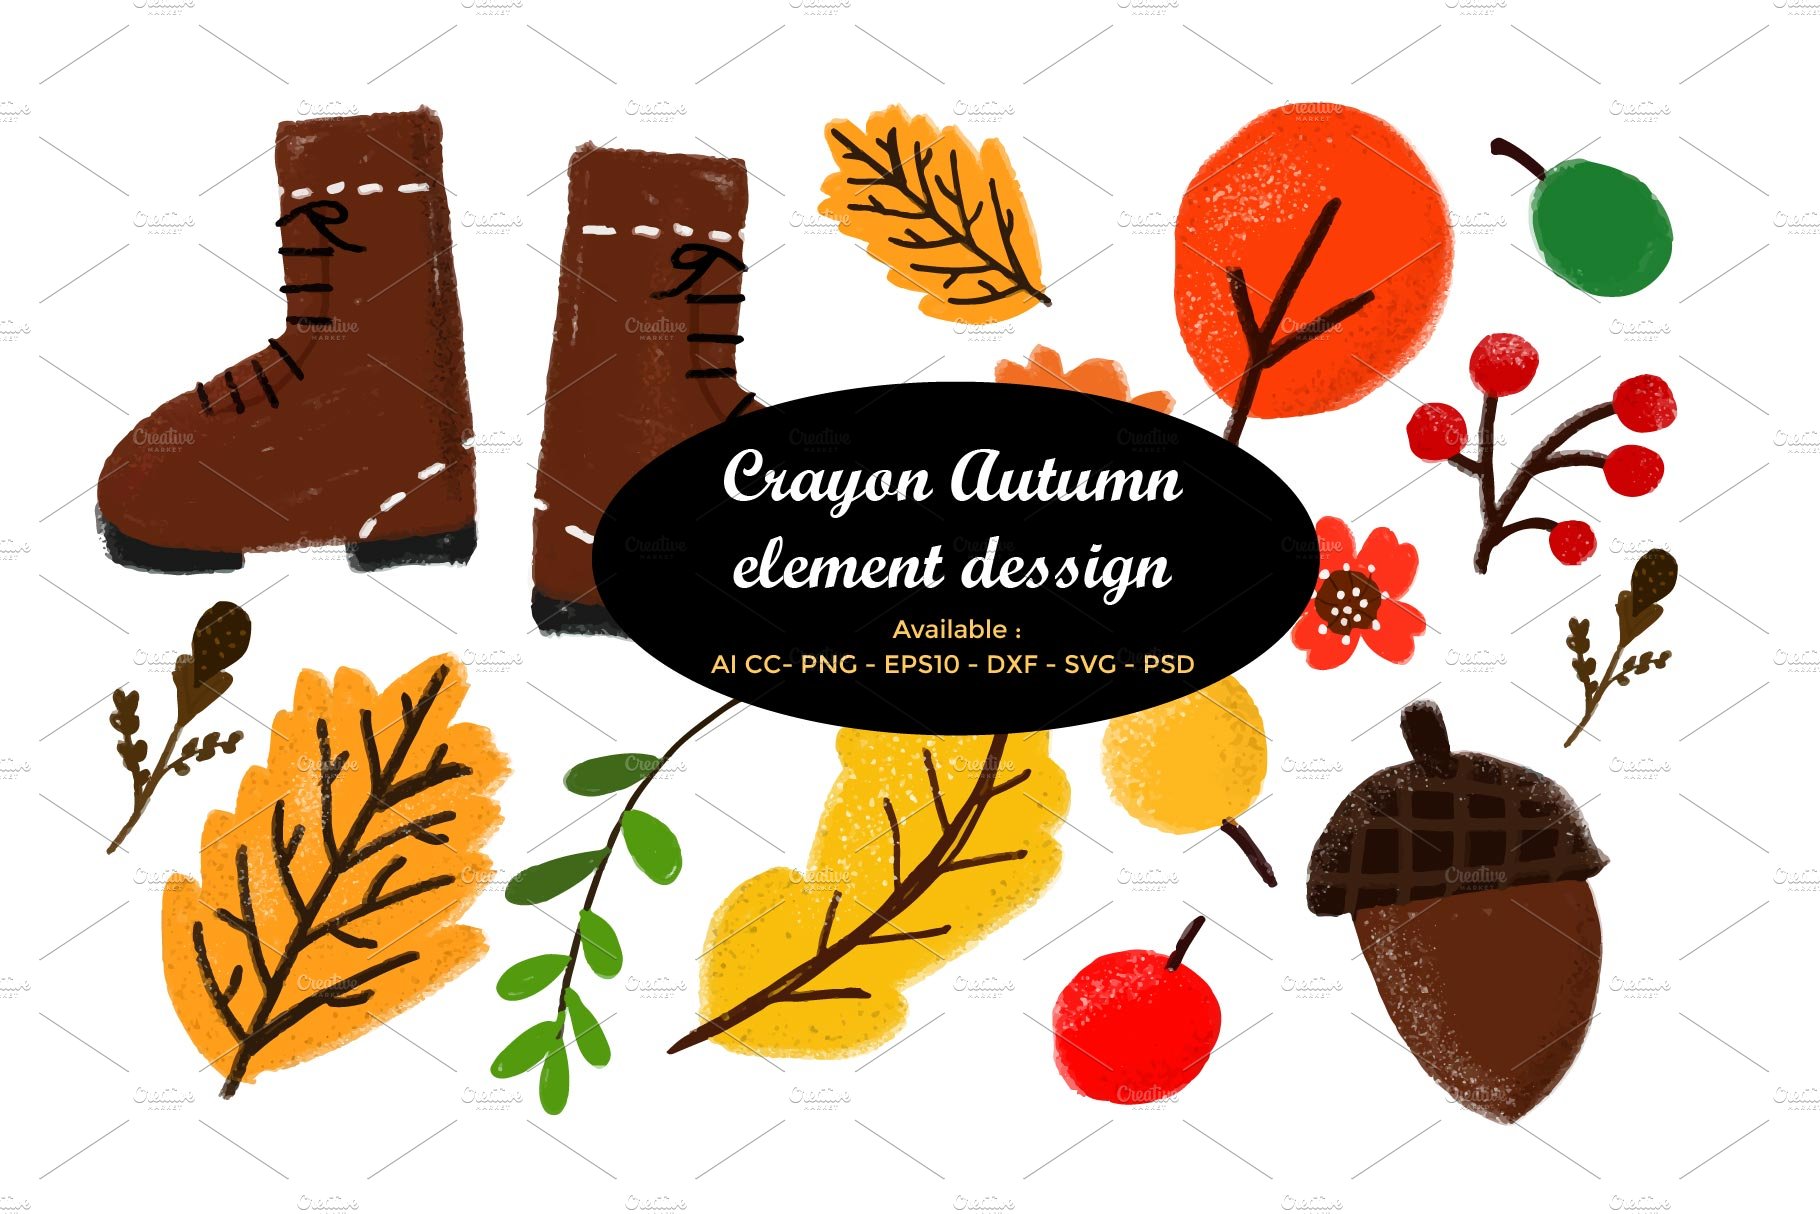 Crayon Autumn element cover image.